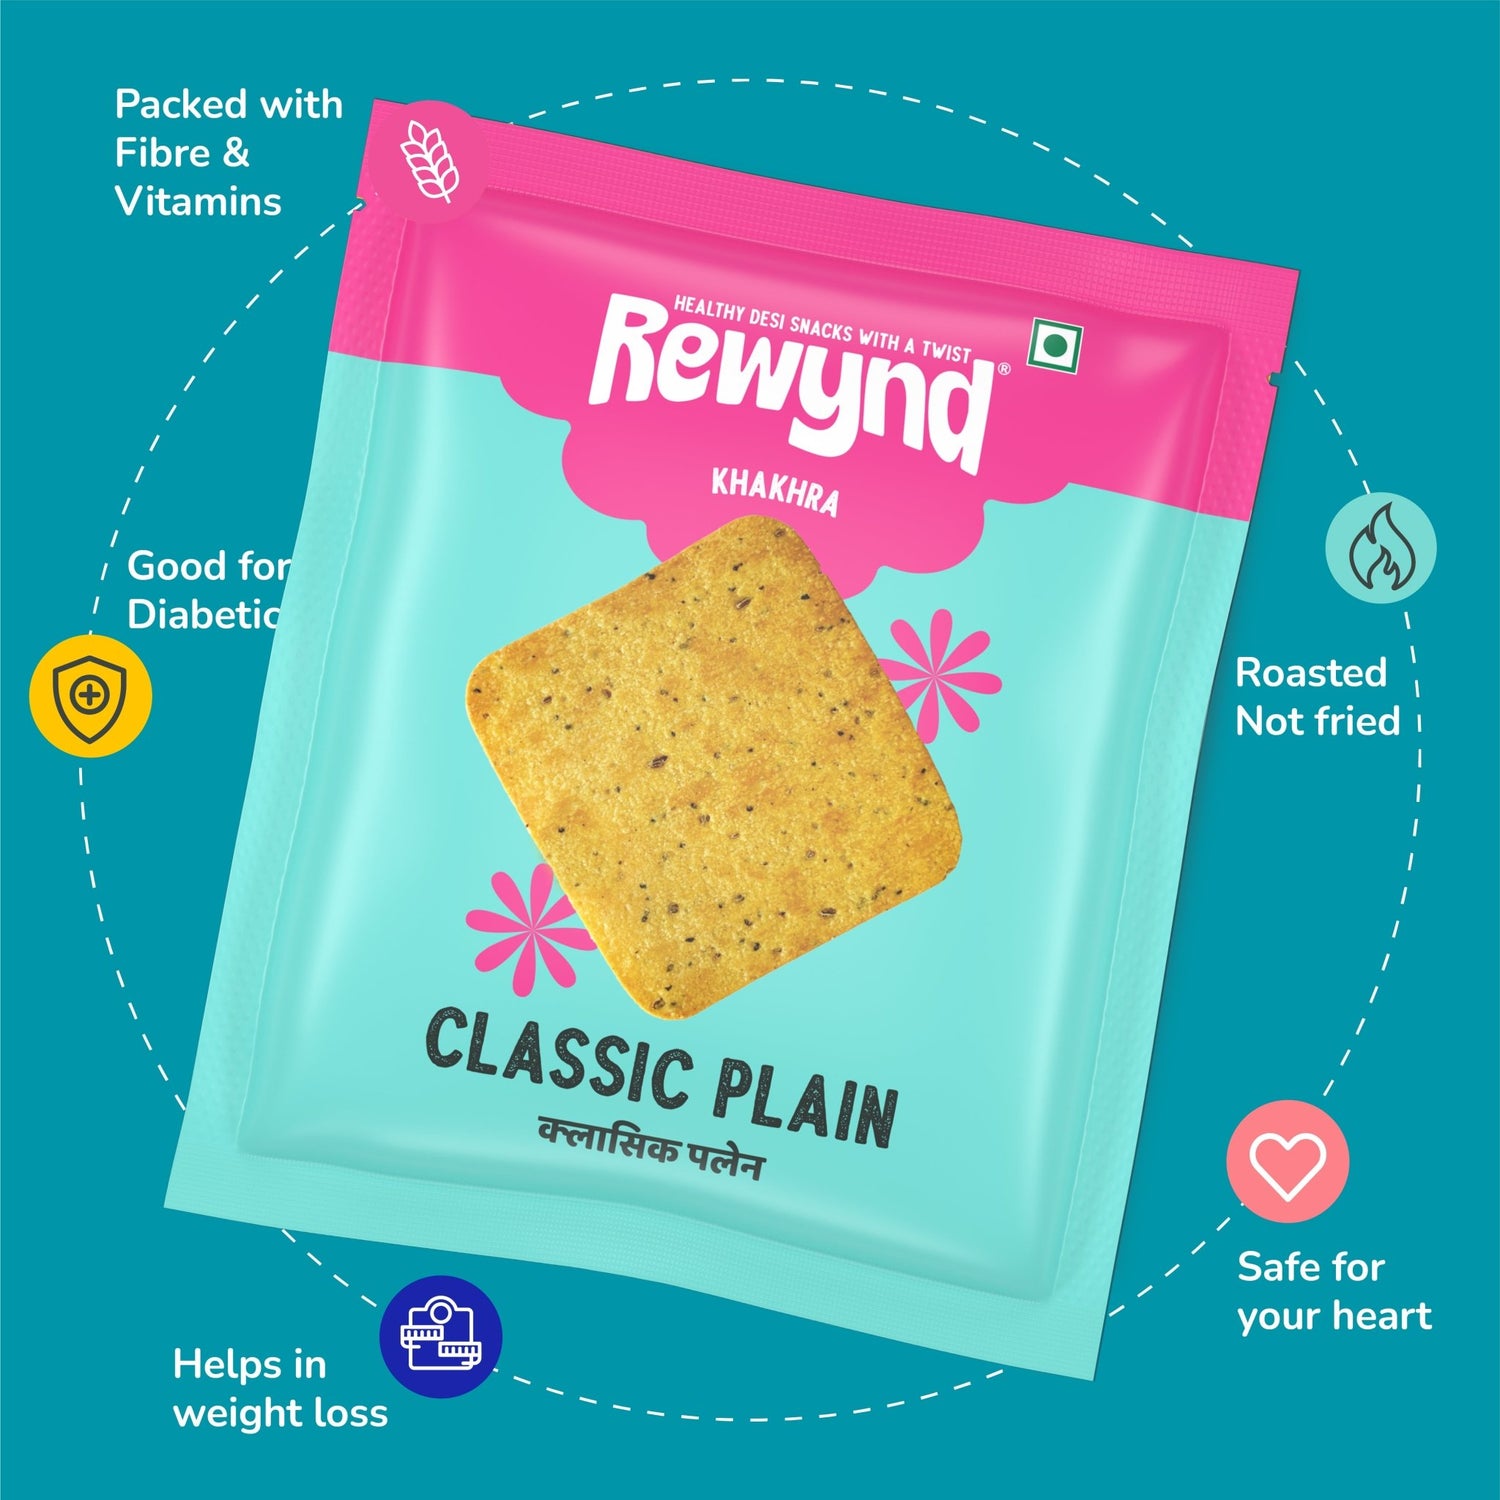 Classic Plain Khakhra - Rewynd Snacks